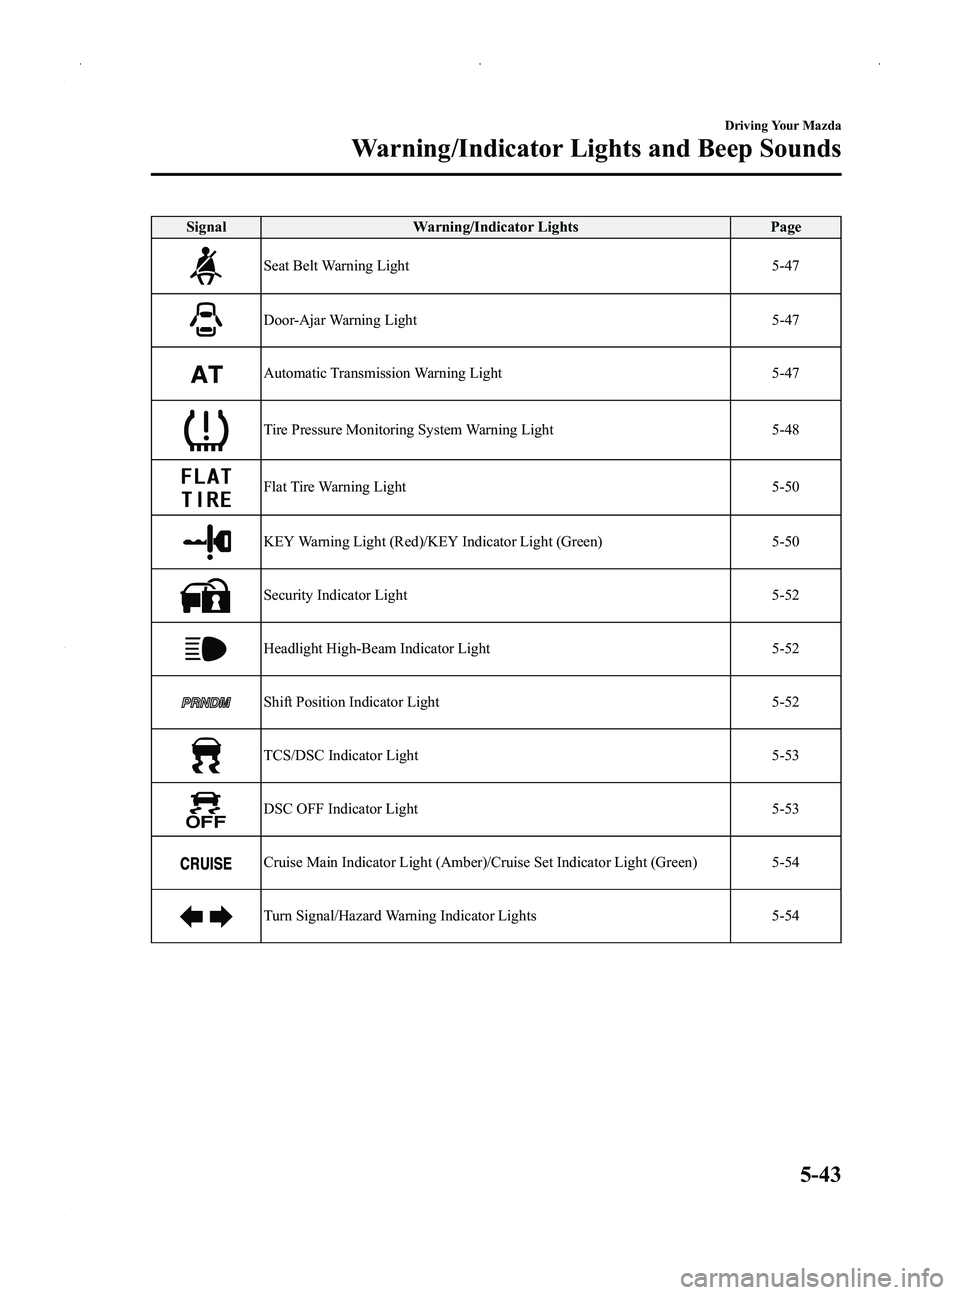 MAZDA MODEL MX-5 MIATA PRHT 2014  Owners Manual Black plate (187,1)
SignalWarning/Indicator Lights Page
Seat Belt Warning Light 5-47
Door-Ajar Warning Light5-47
Automatic Transmission Warning Light5-47
Tire Pressure Monitoring System Warning Light5